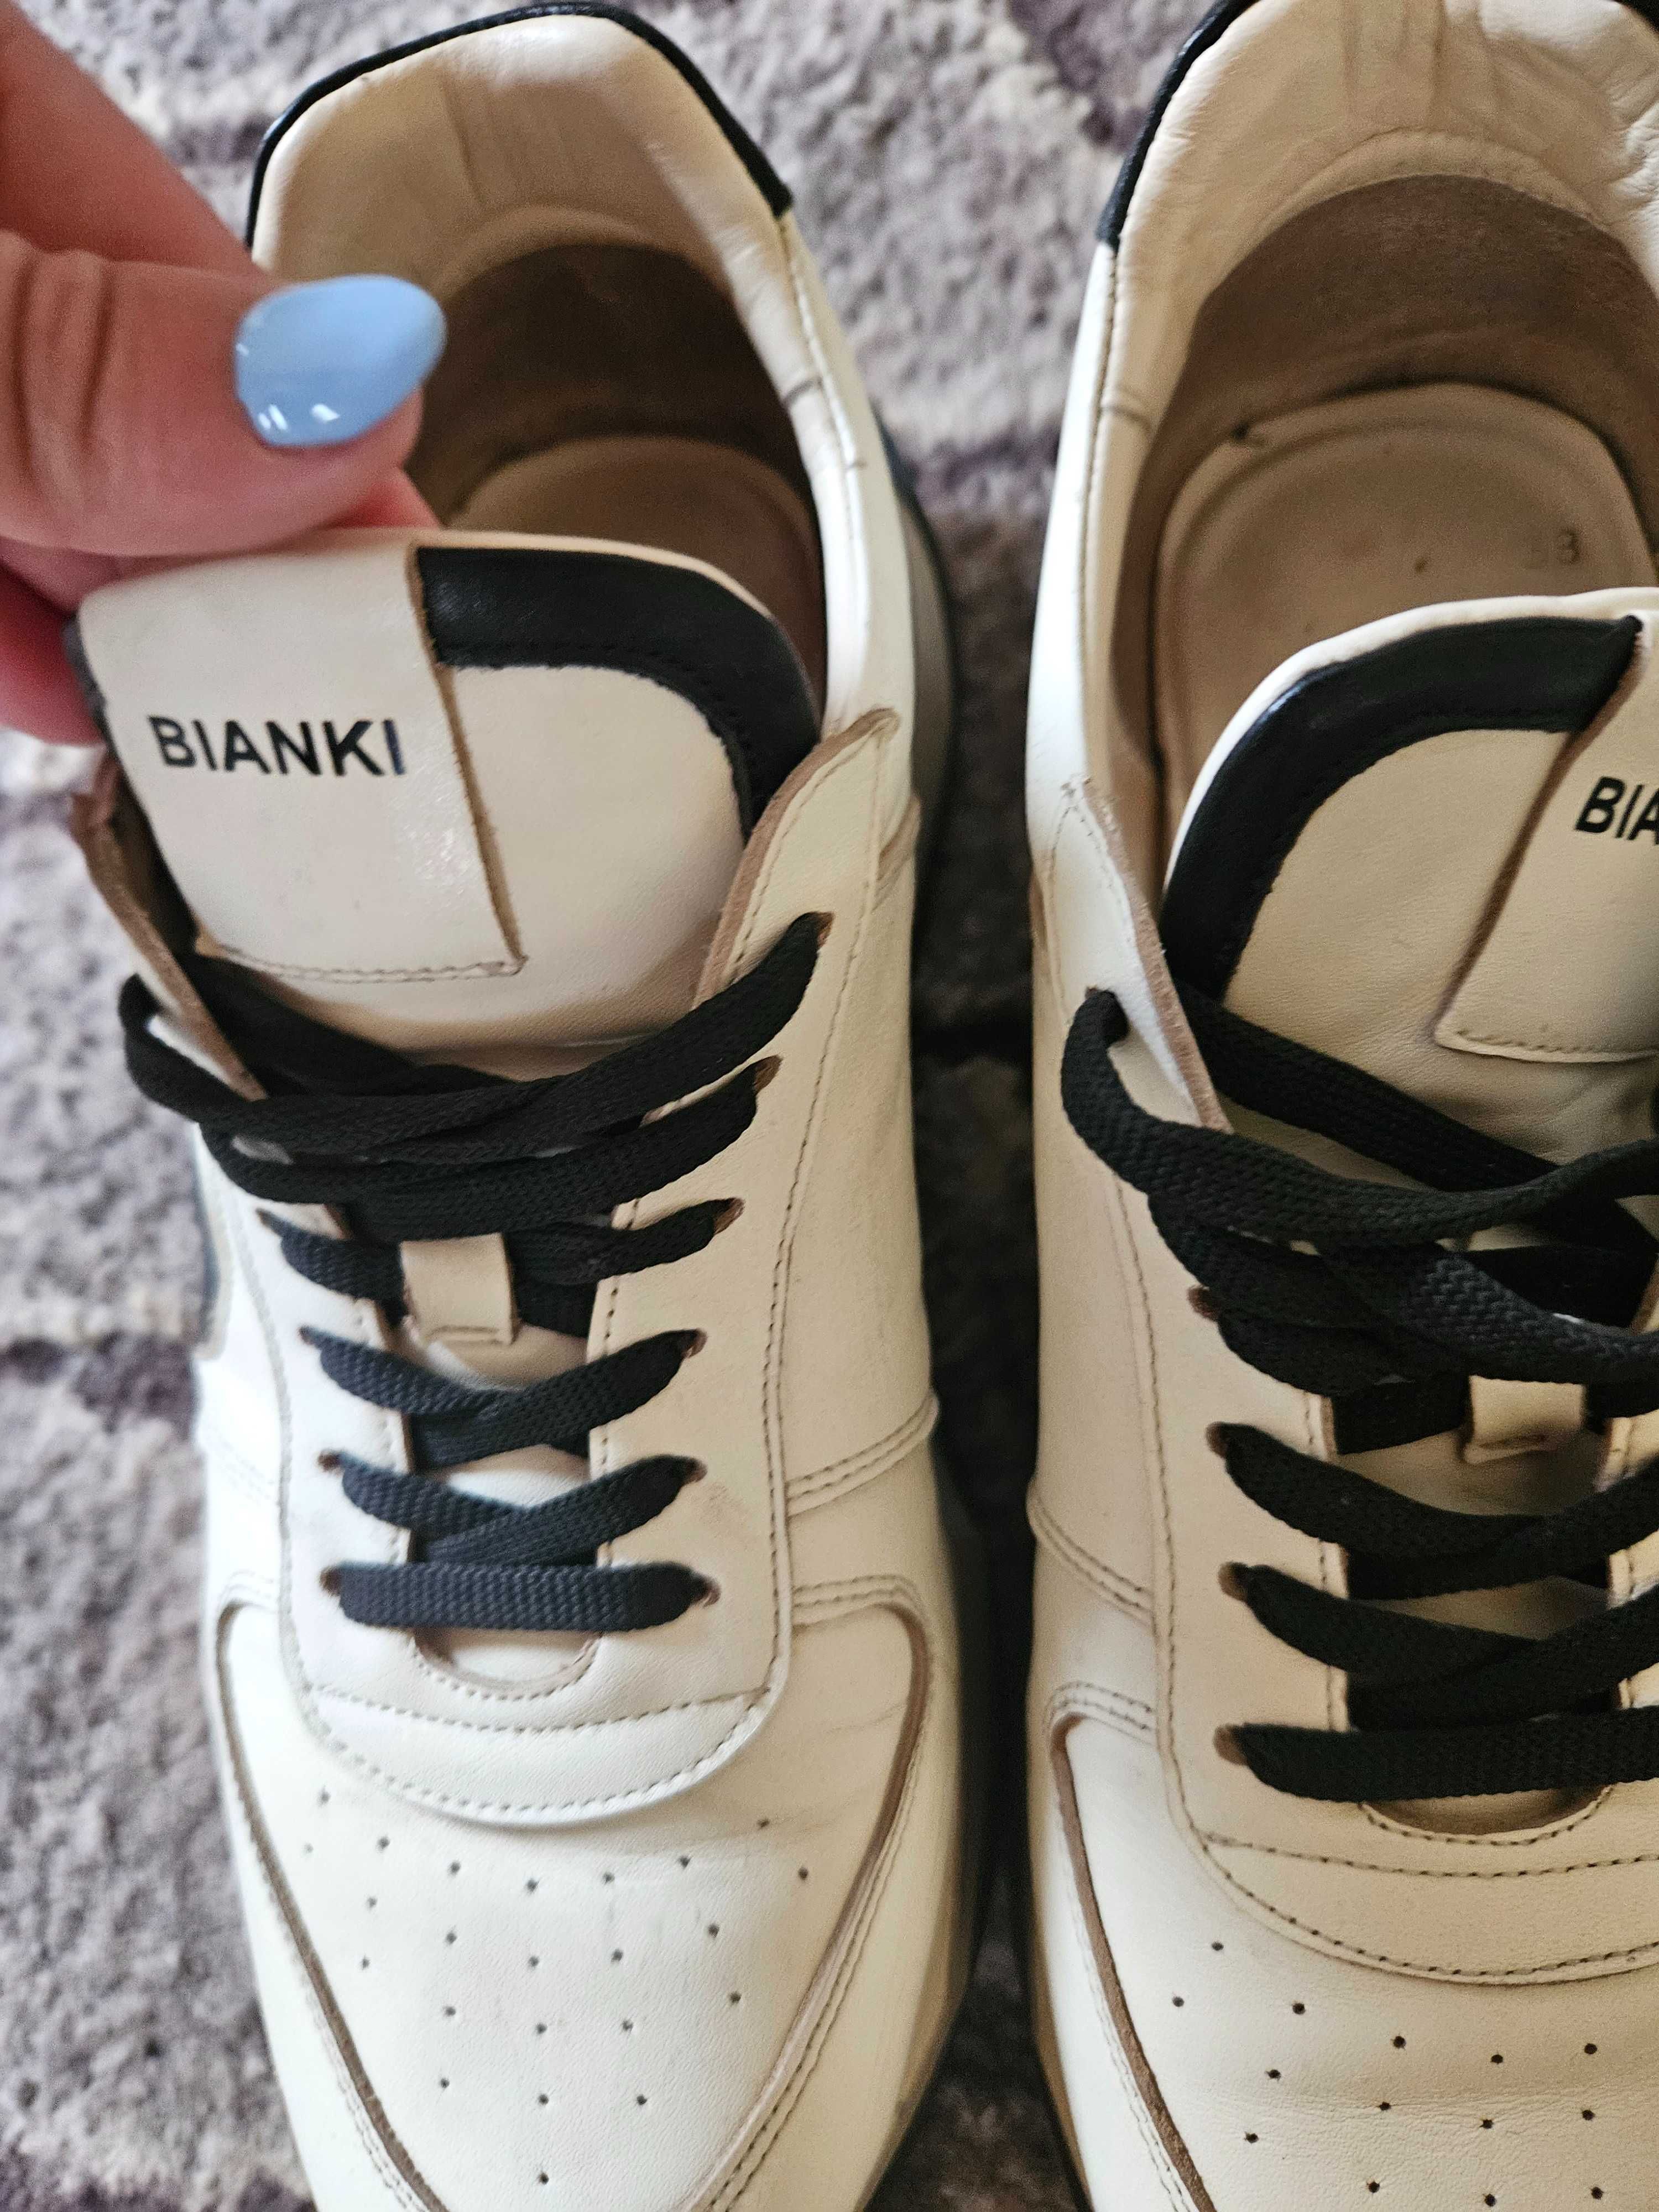 Дамски обувки Bianki- 38 номер естествена кожа